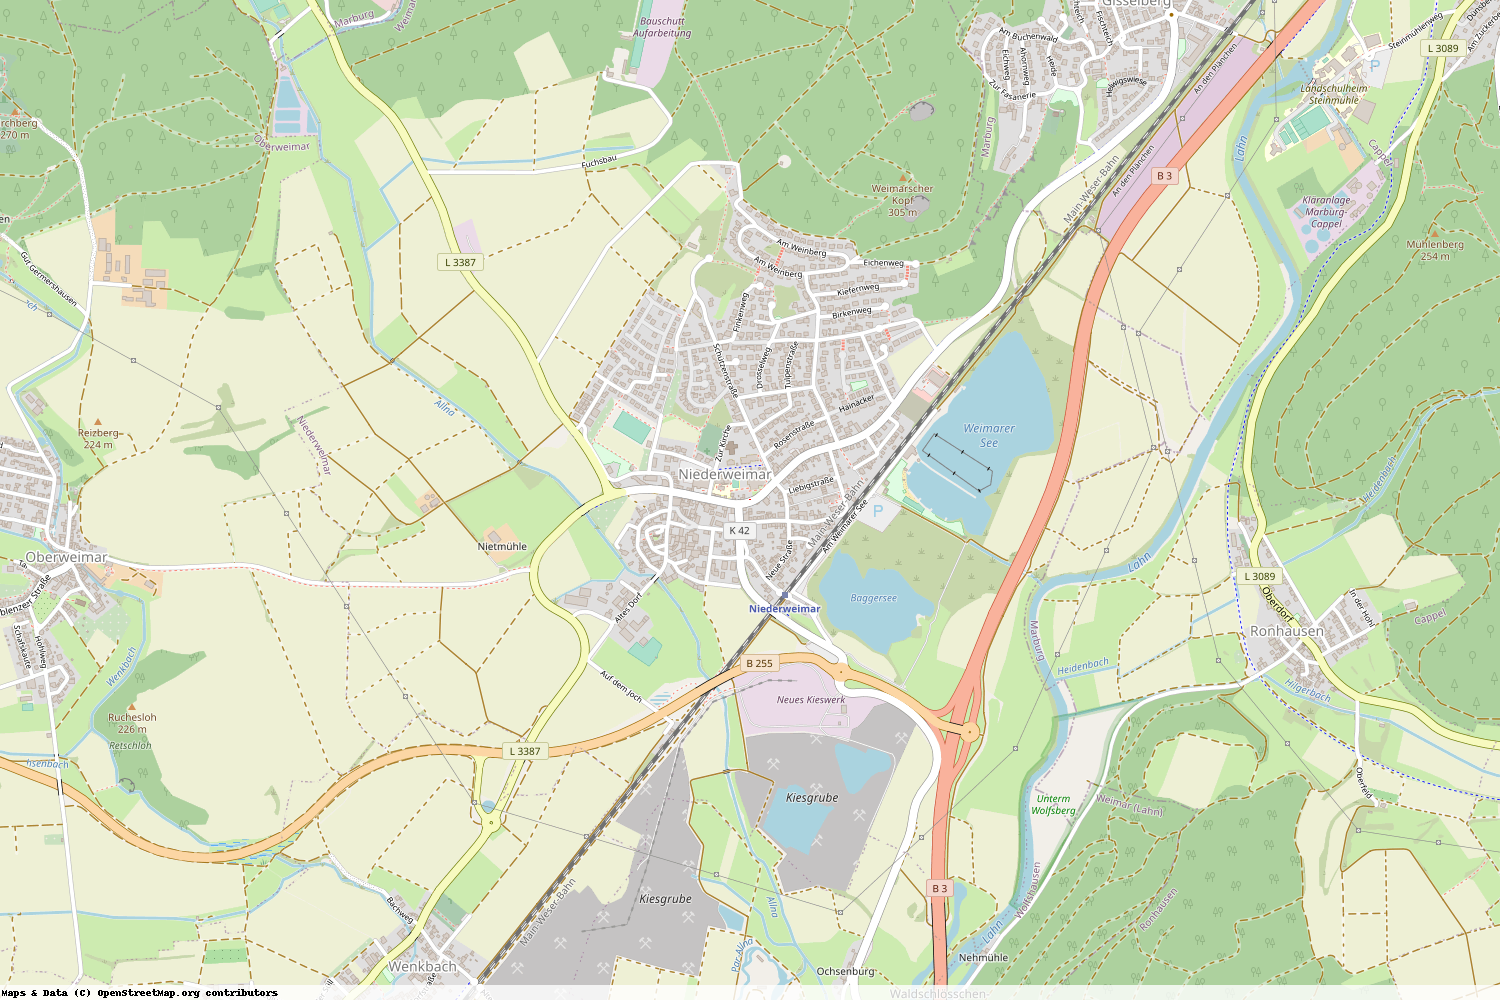 Ist gerade Stromausfall in Hessen - Marburg-Biedenkopf - Weimar (Lahn)?